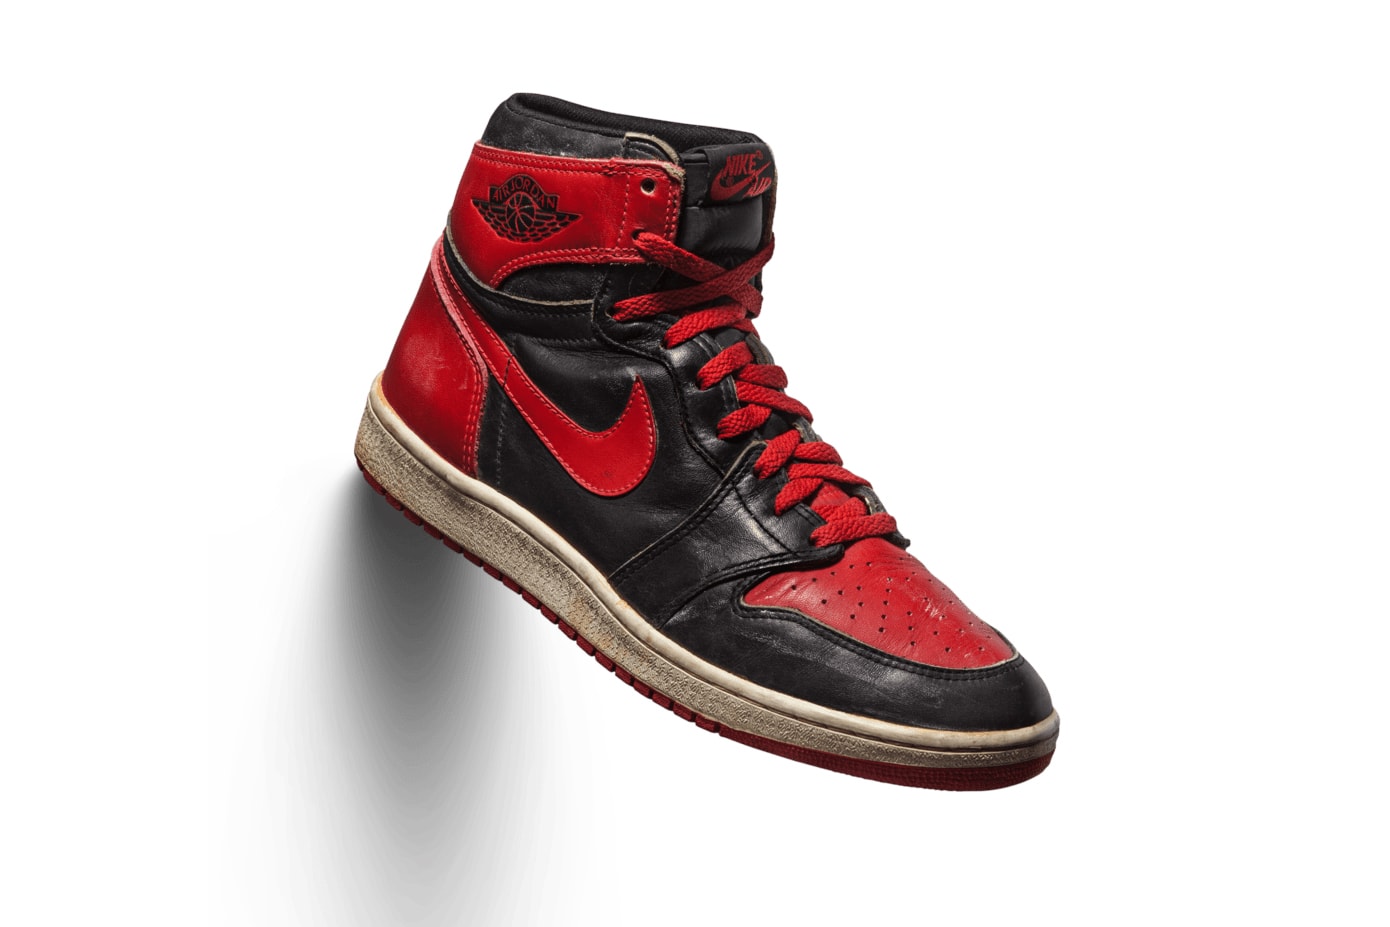 Jordan Brand 打造「Air Jordan Collection」網站回顧歷代球鞋設計